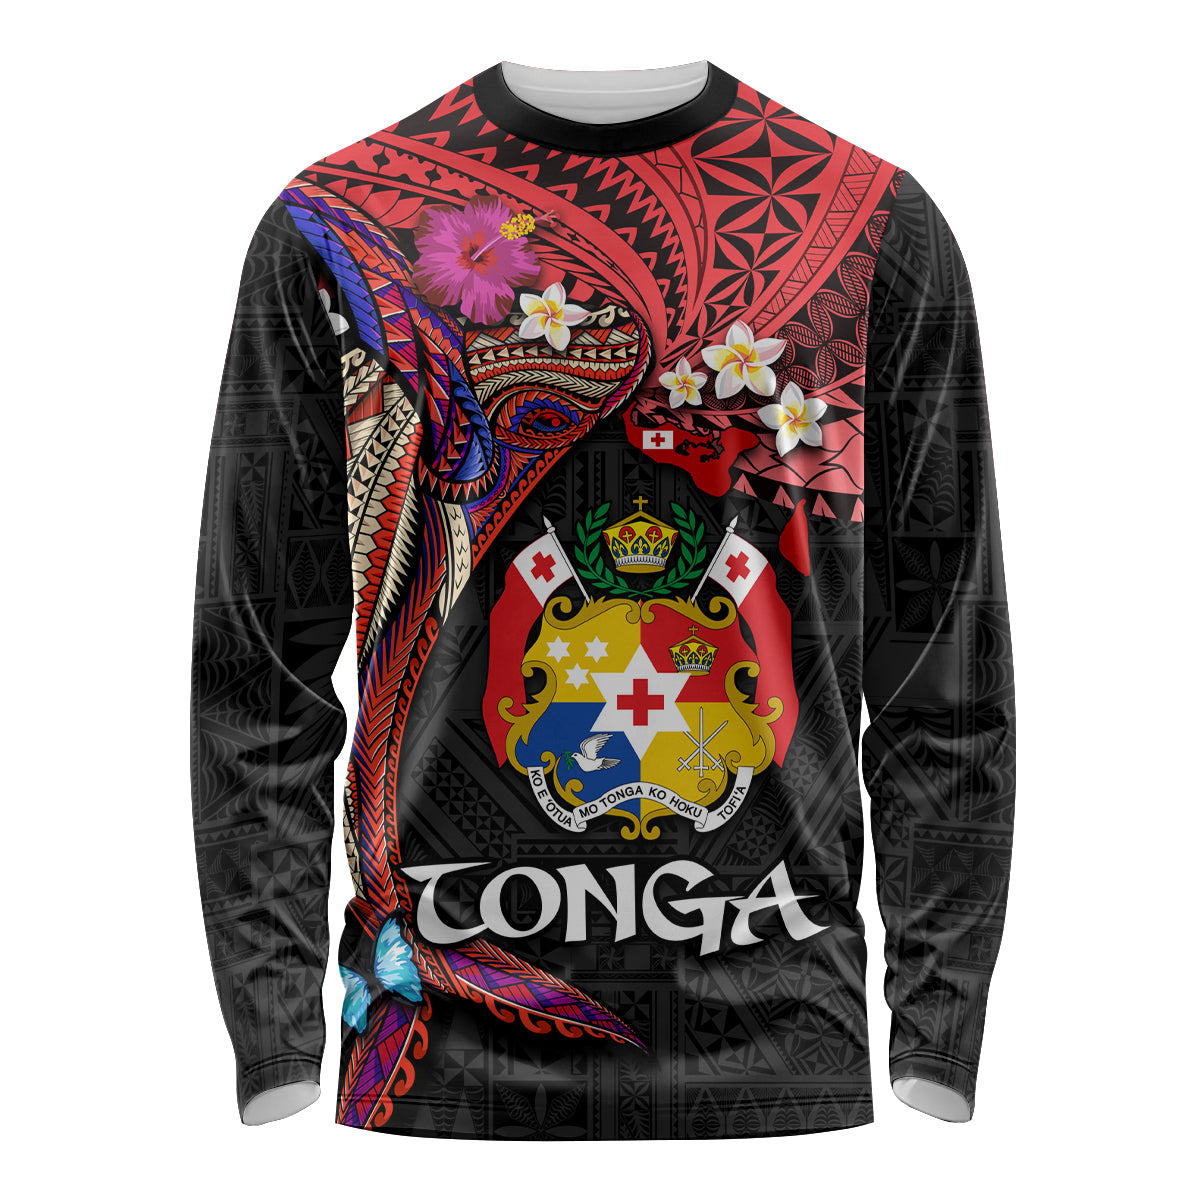 Tonga Emancipation Day Long Sleeve Shirt Ngatu Humpback Whale Polynesian Flower